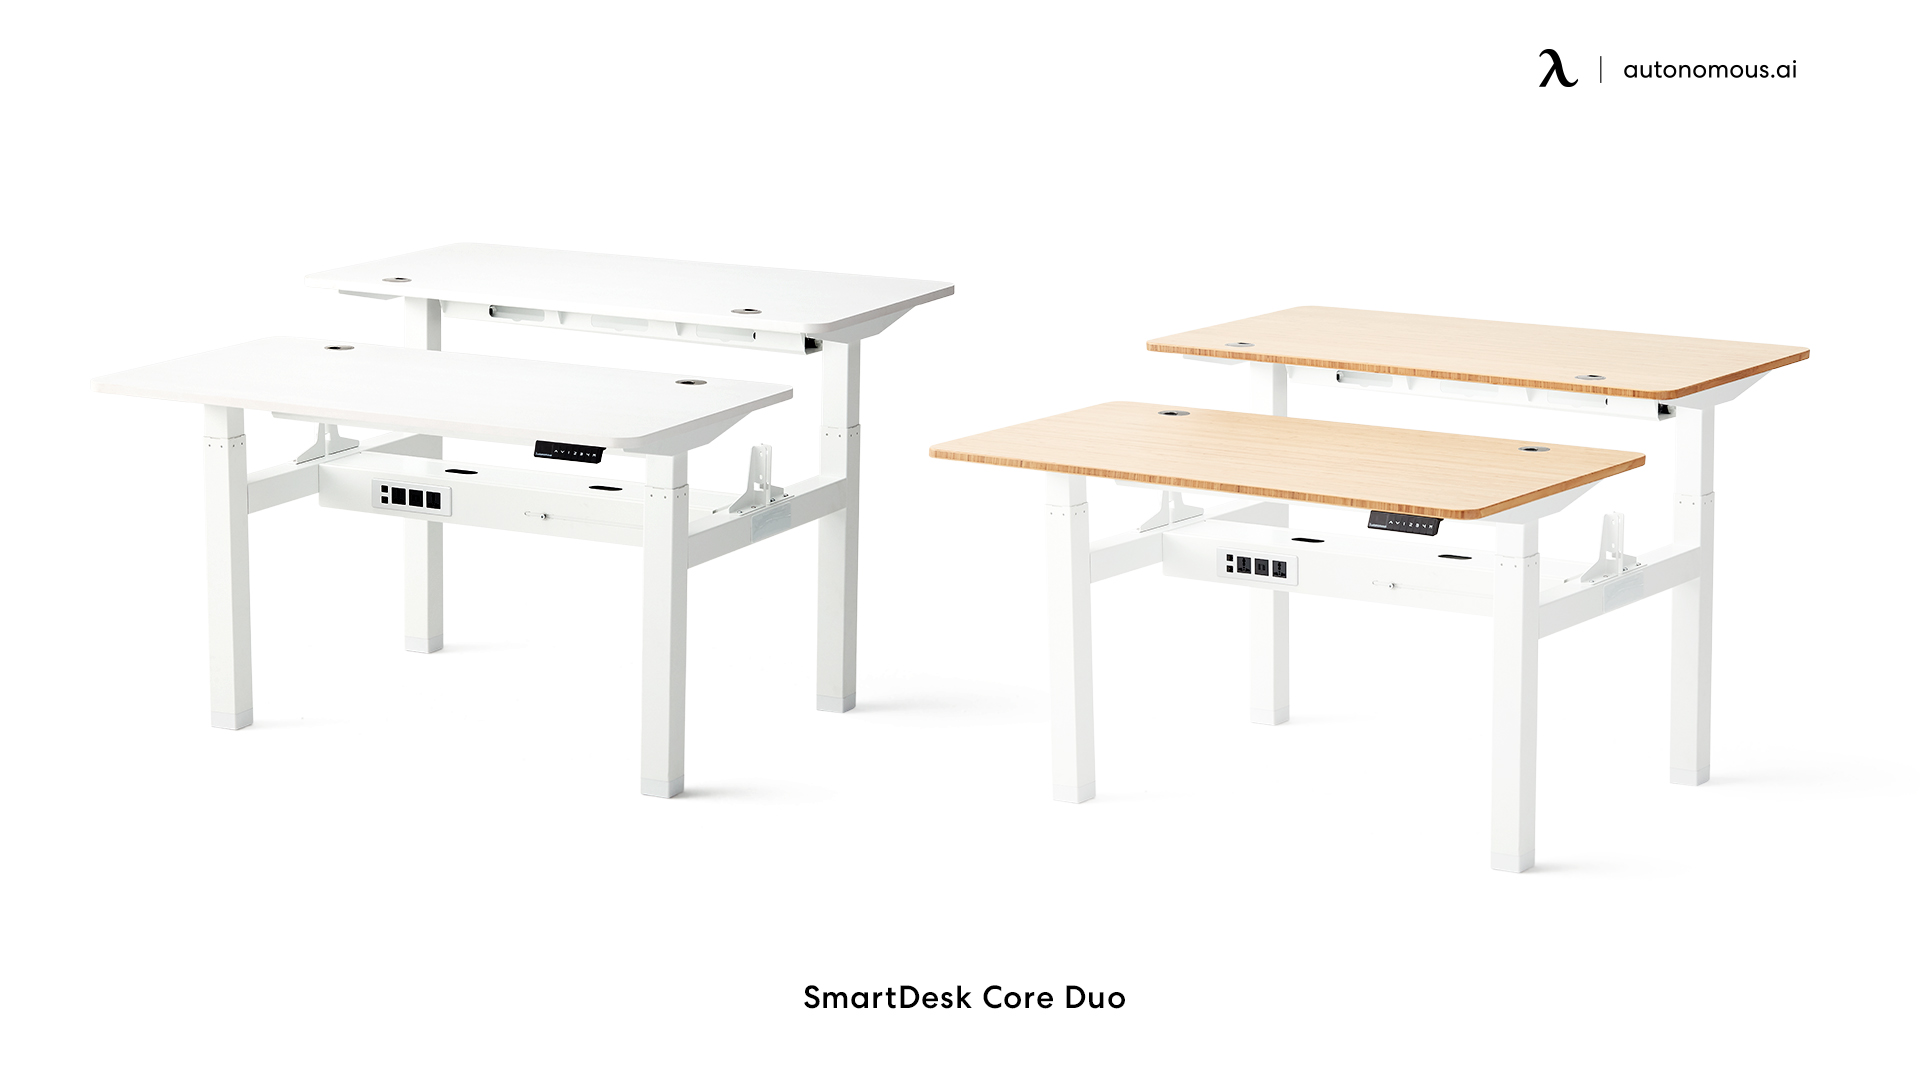 SmartDesk Core Duo home office desk ideas